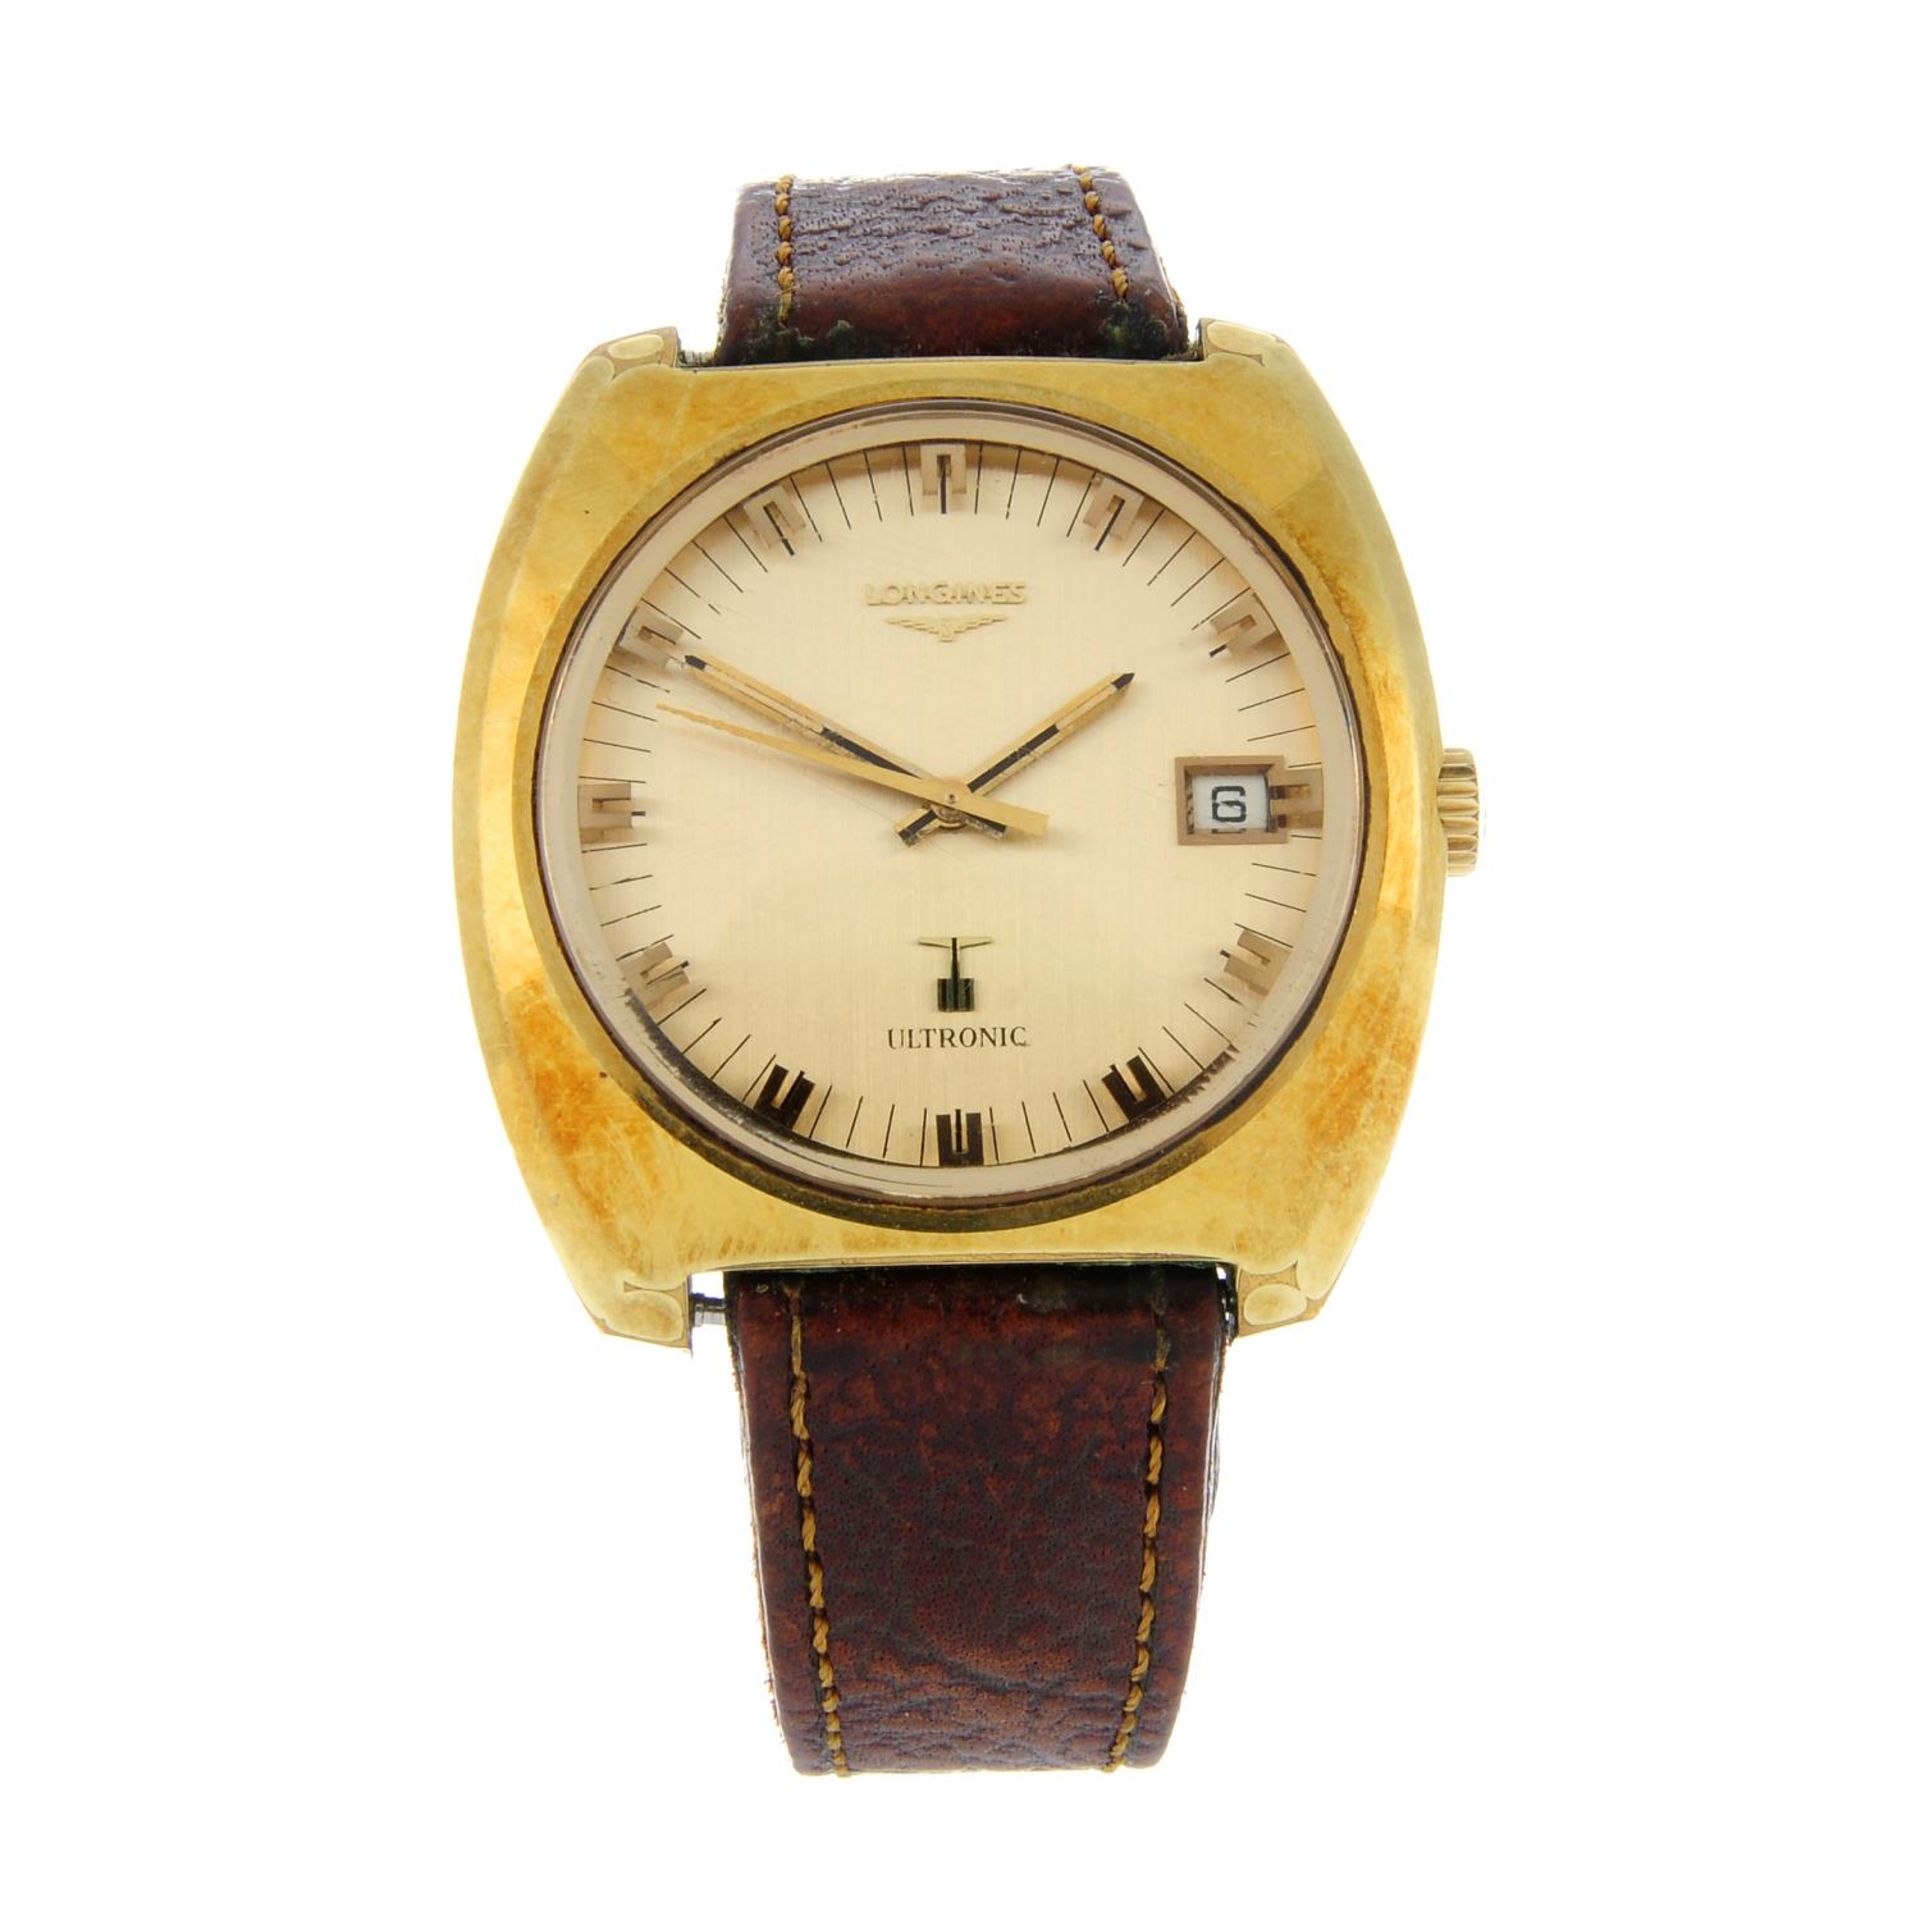 LONGINES - a gentleman's Ultronic wrist watch.